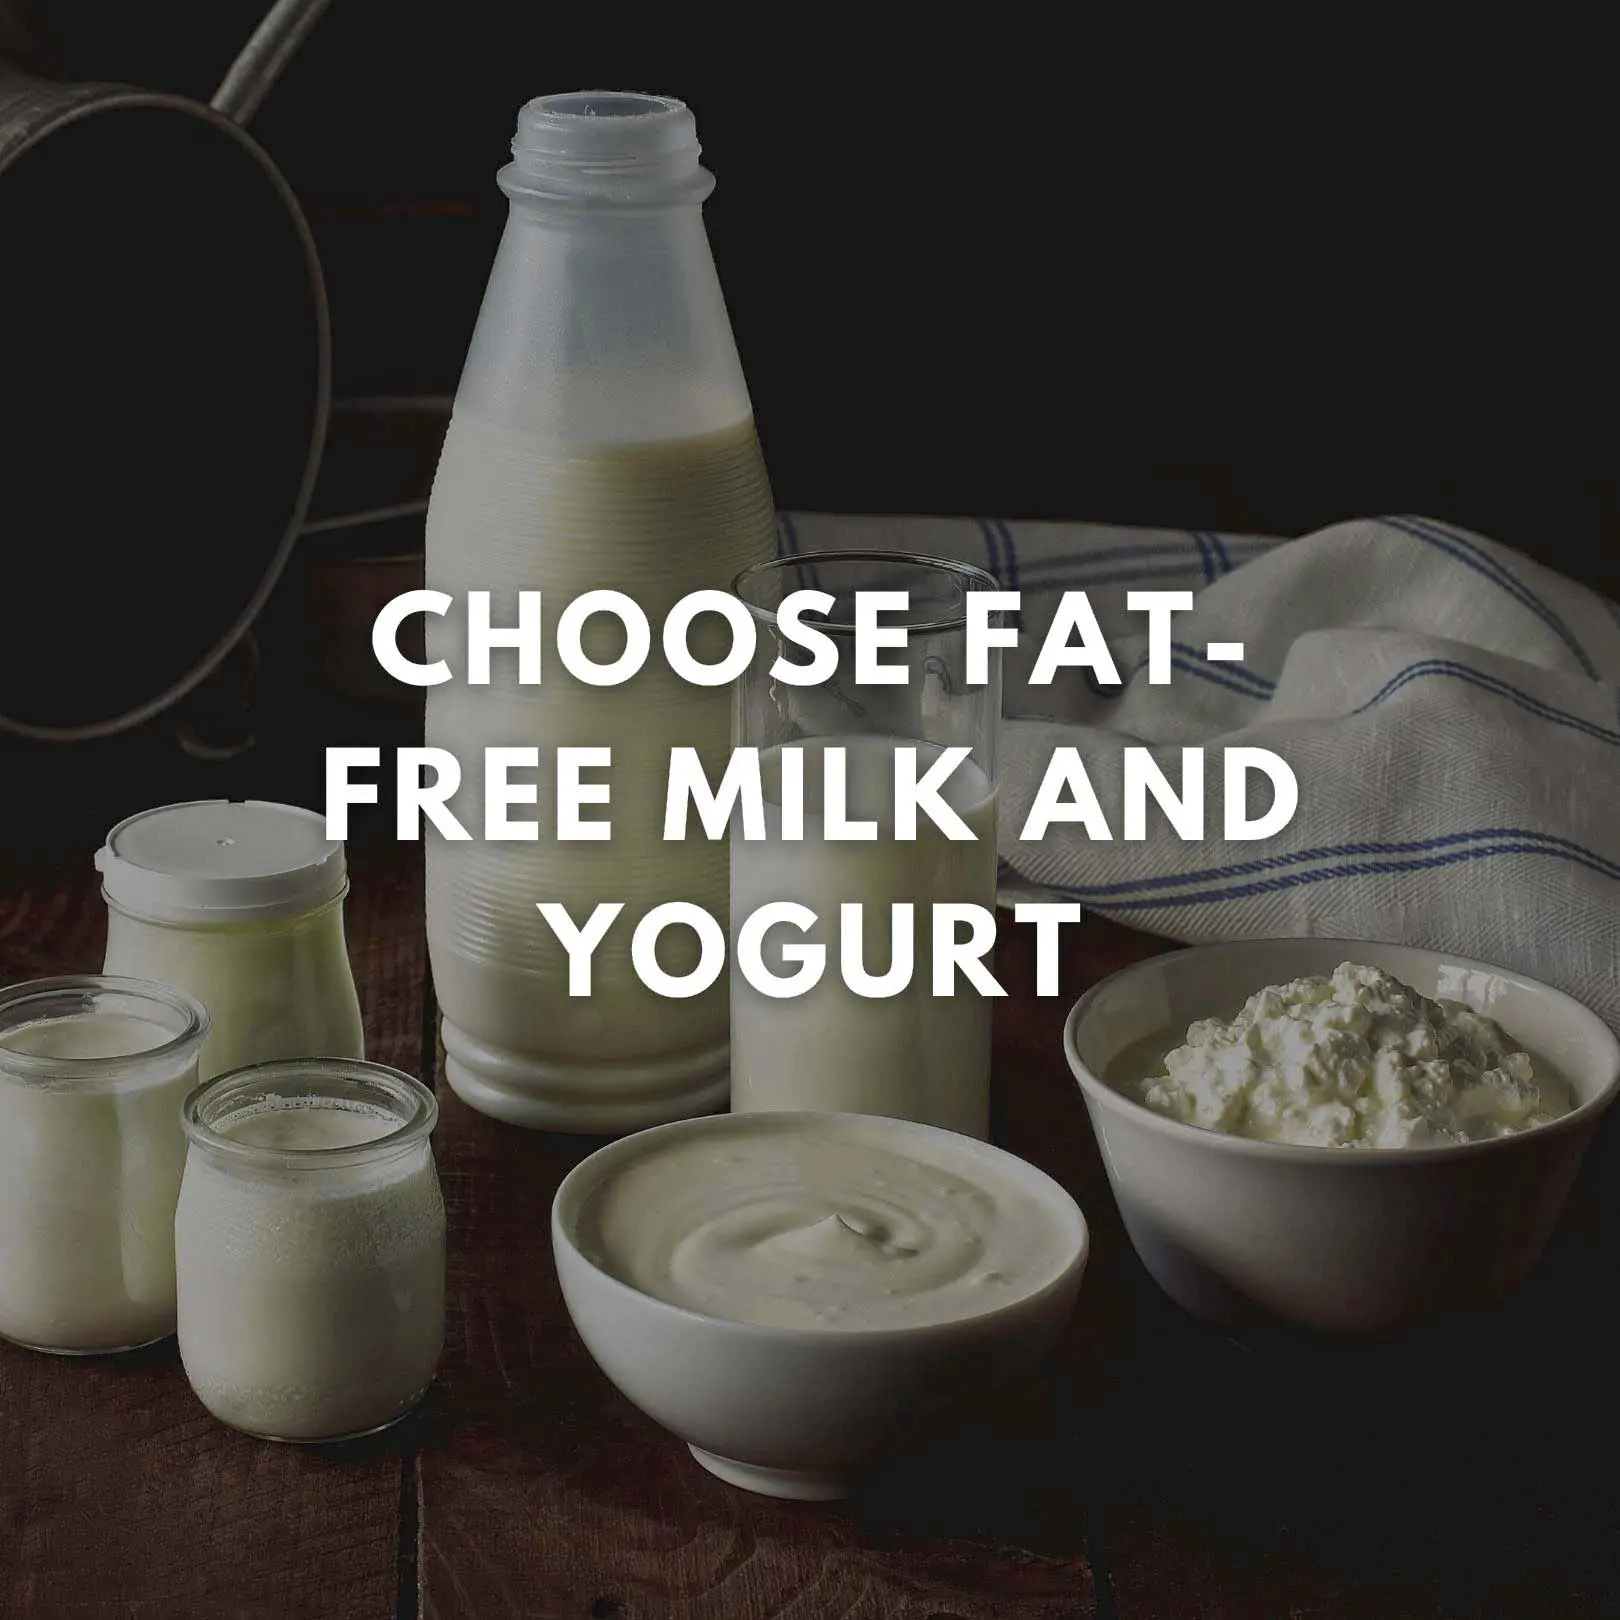 Choose fat-free milk and yogurt